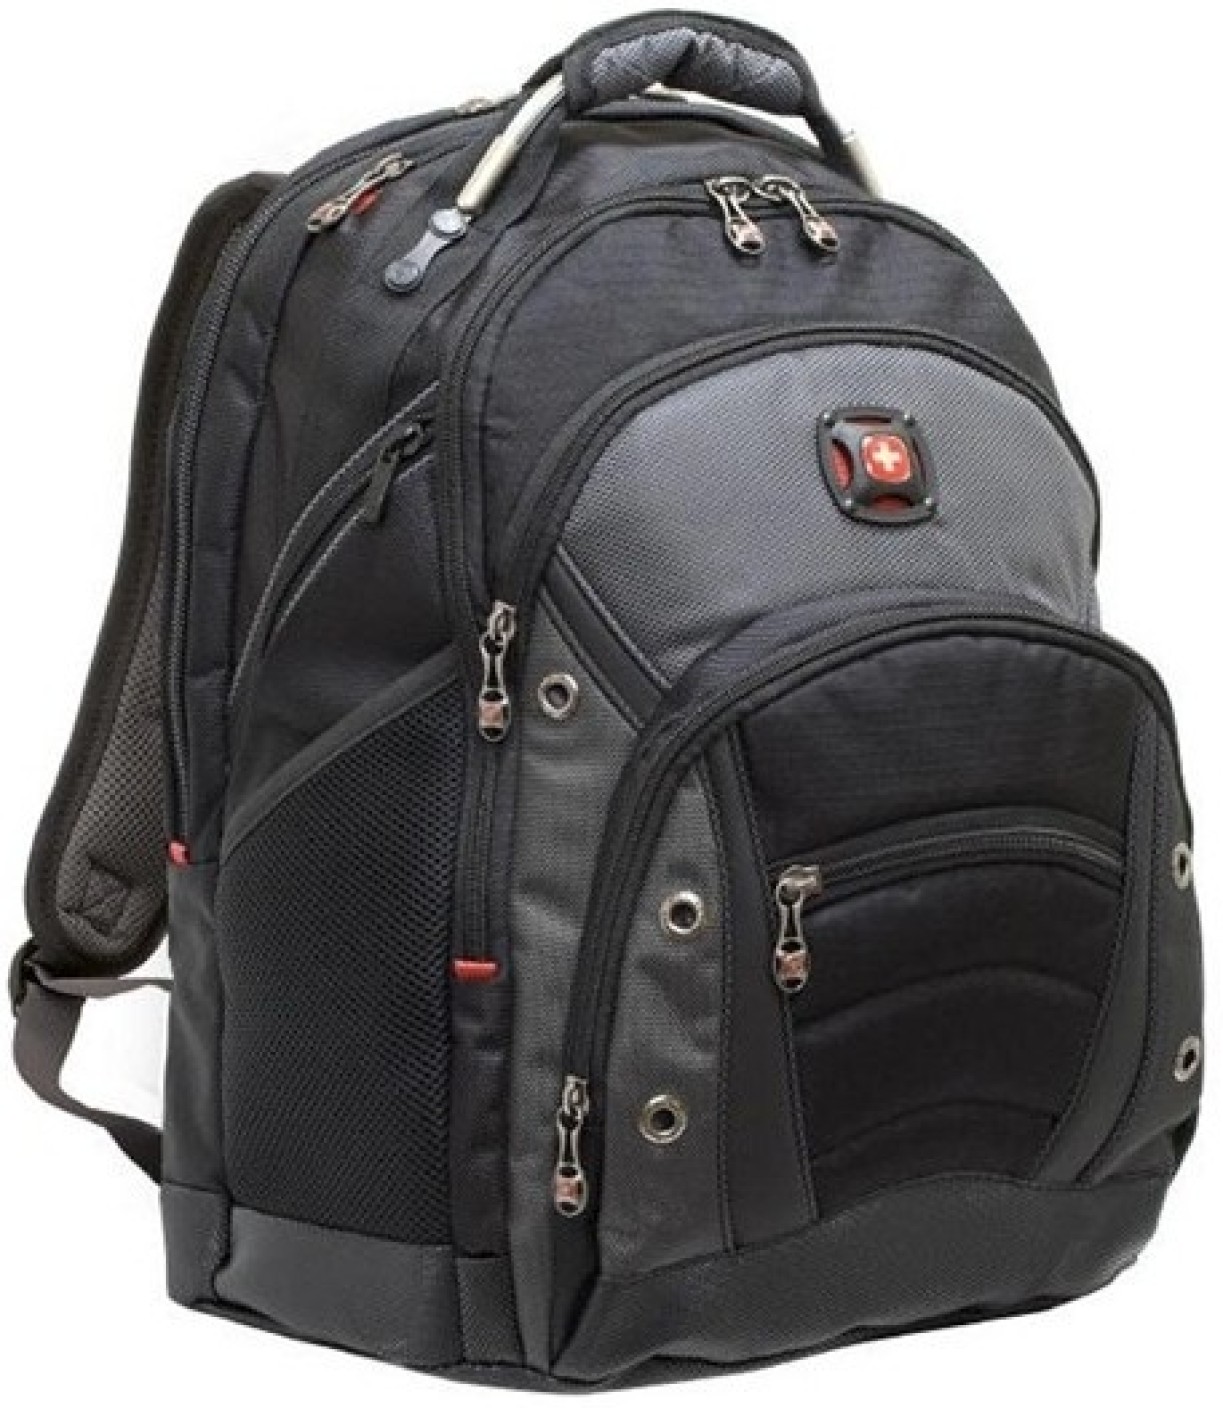 Best Laptop Backpack Brands In India - Best Design Idea